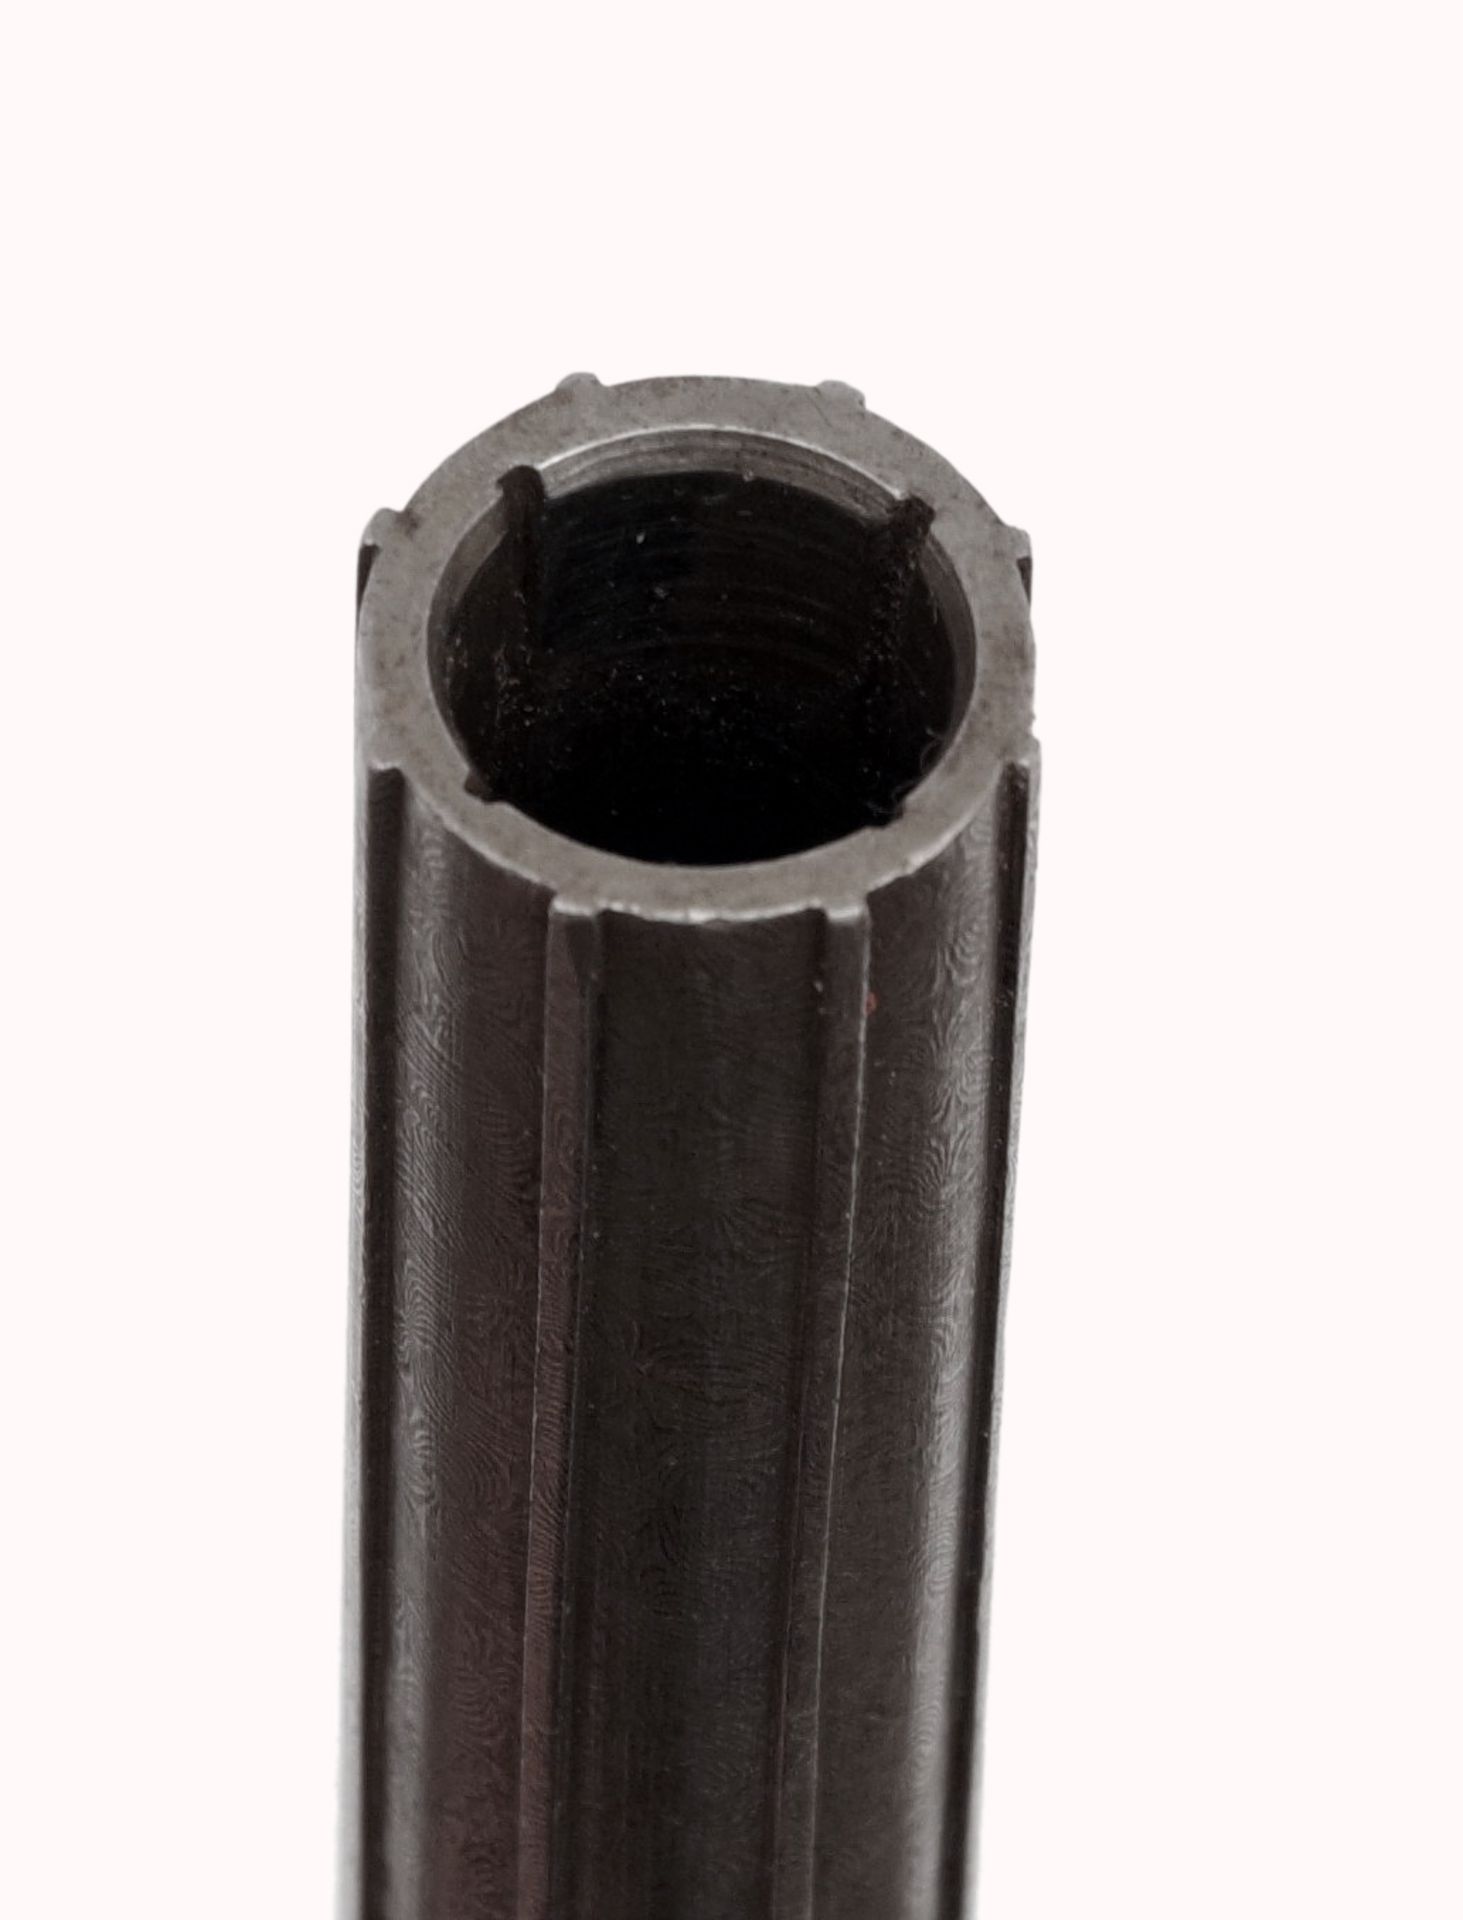 A Percussion Cap Pocket Pistol with Long Barrel - Image 7 of 7